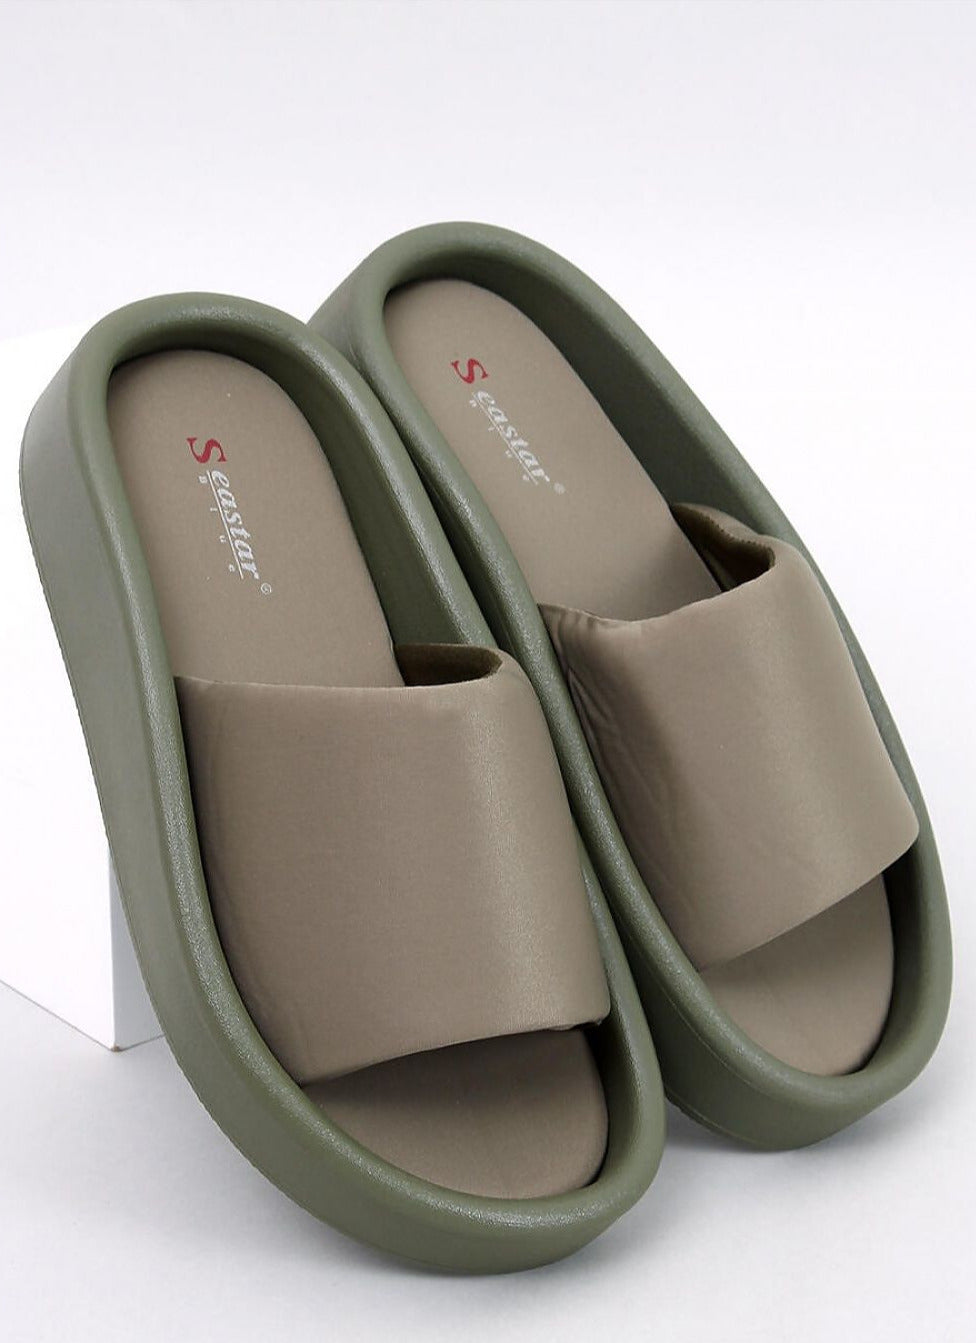 Soft green flip-flops on a rubber sole